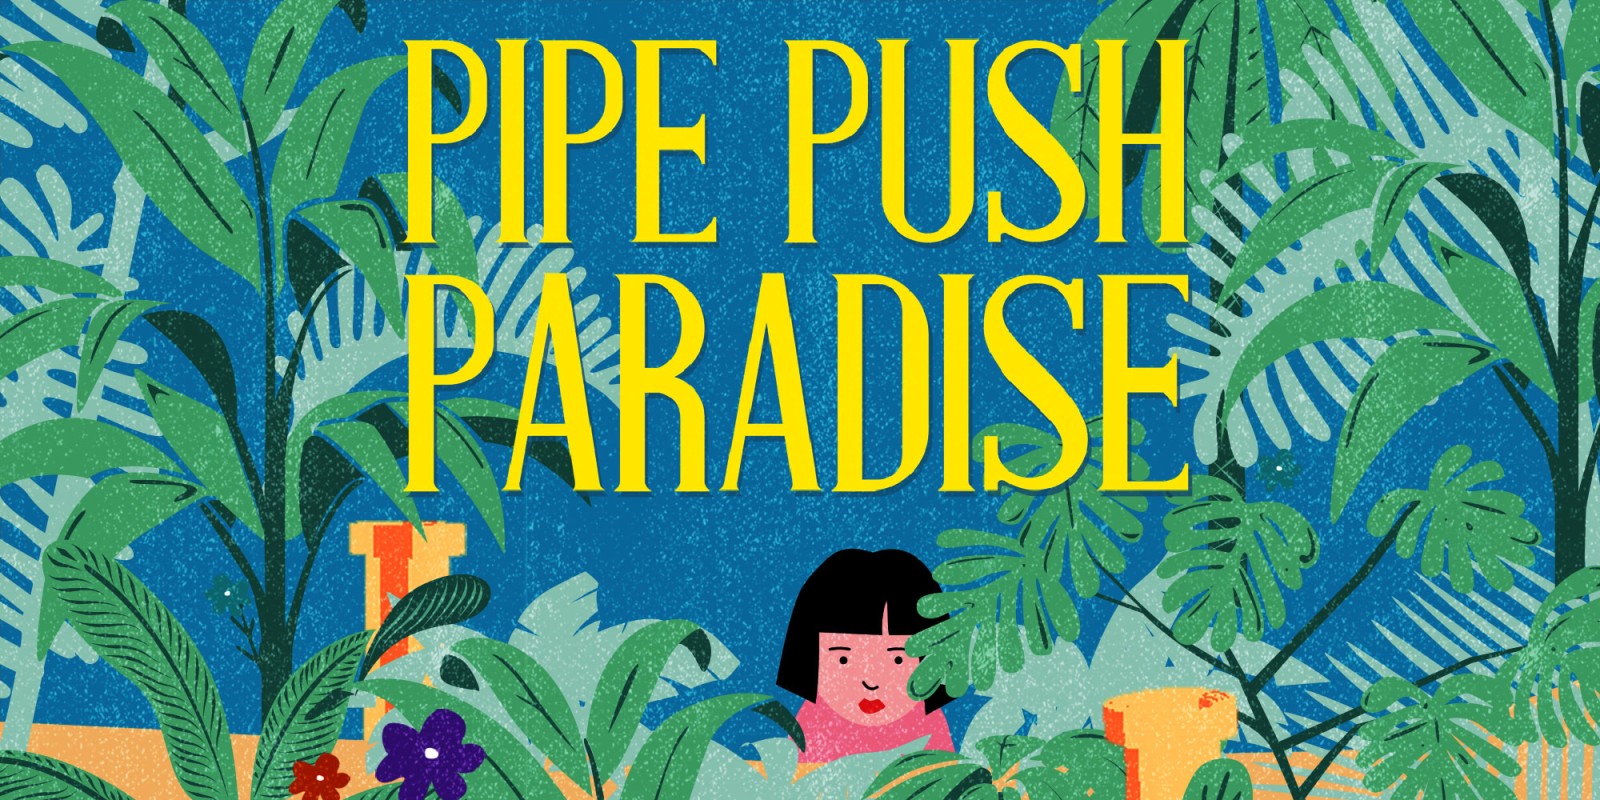 Pipe Push Paradise